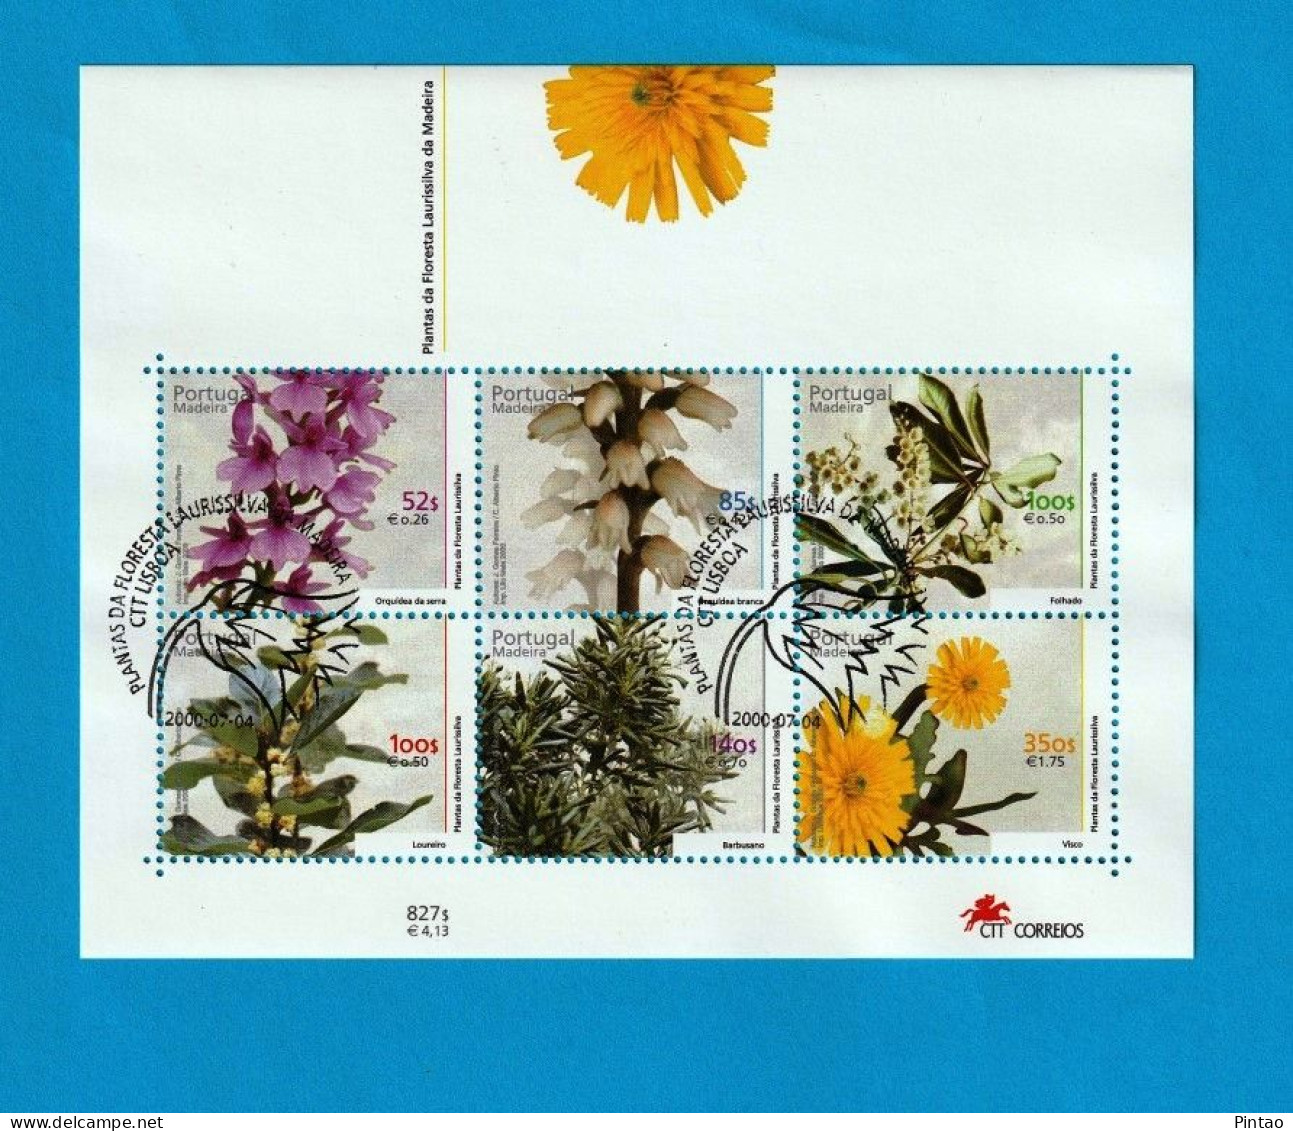 PTB1708- PORTUGAL (MADEIRA) 2000 Nº 234 (selos 2711_ 16)- CTO - Blocks & Kleinbögen